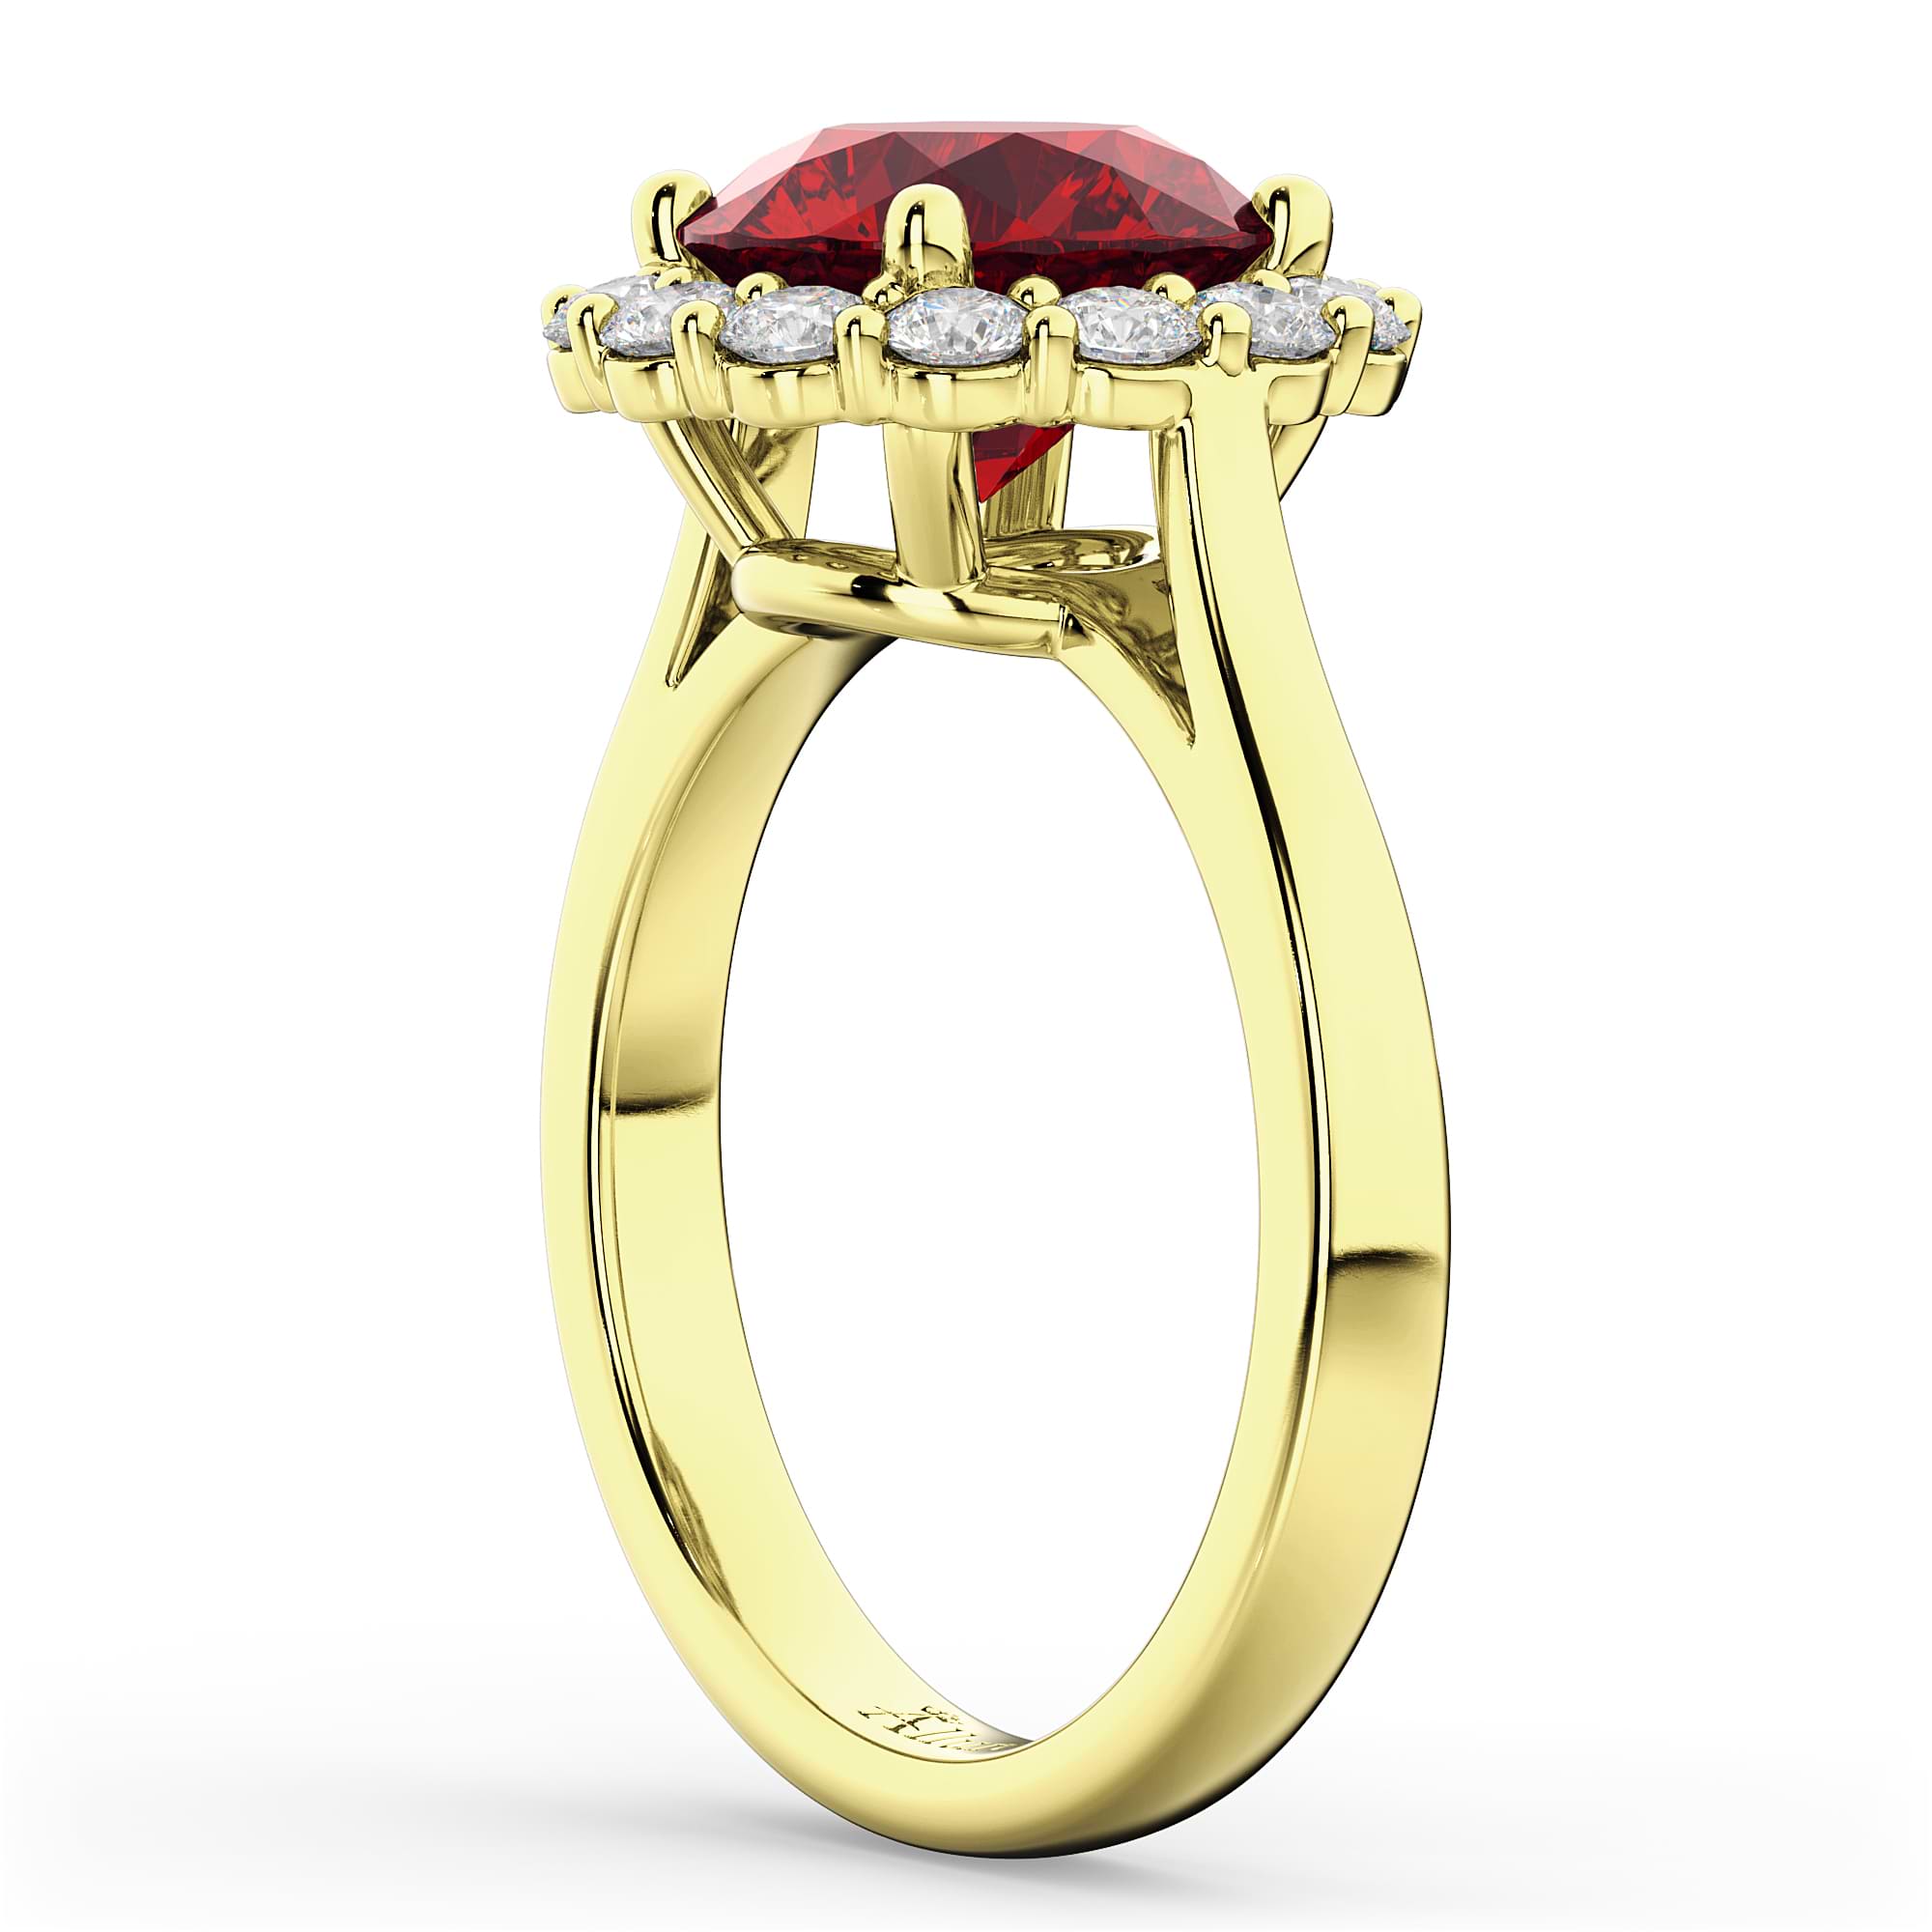 Halo Round Ruby & Diamond Engagement Ring 14K Yellow Gold 4.45ct